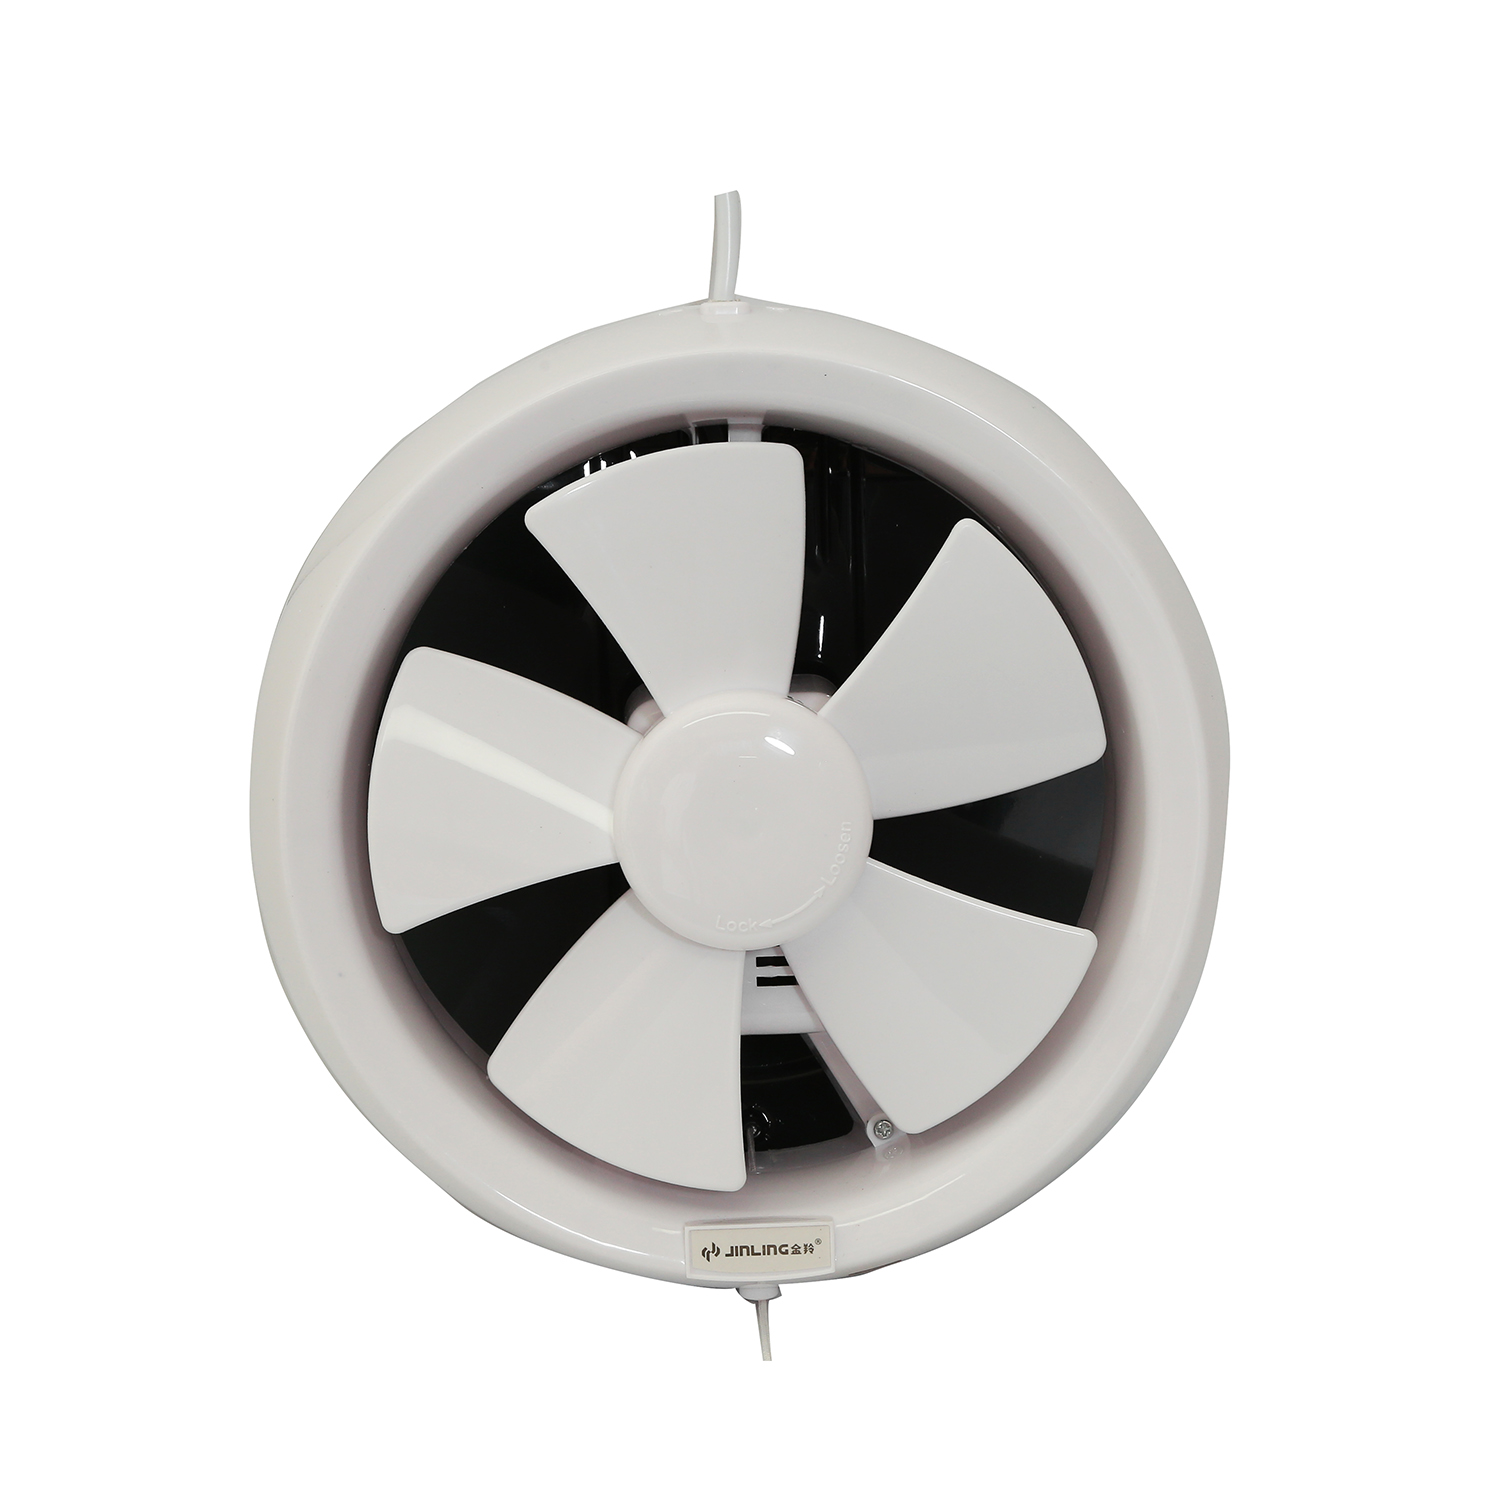 Ventilador de extracción de ventilación moderno para redondo / ventana / montaje en pared / sótano / baño / cocina en línea